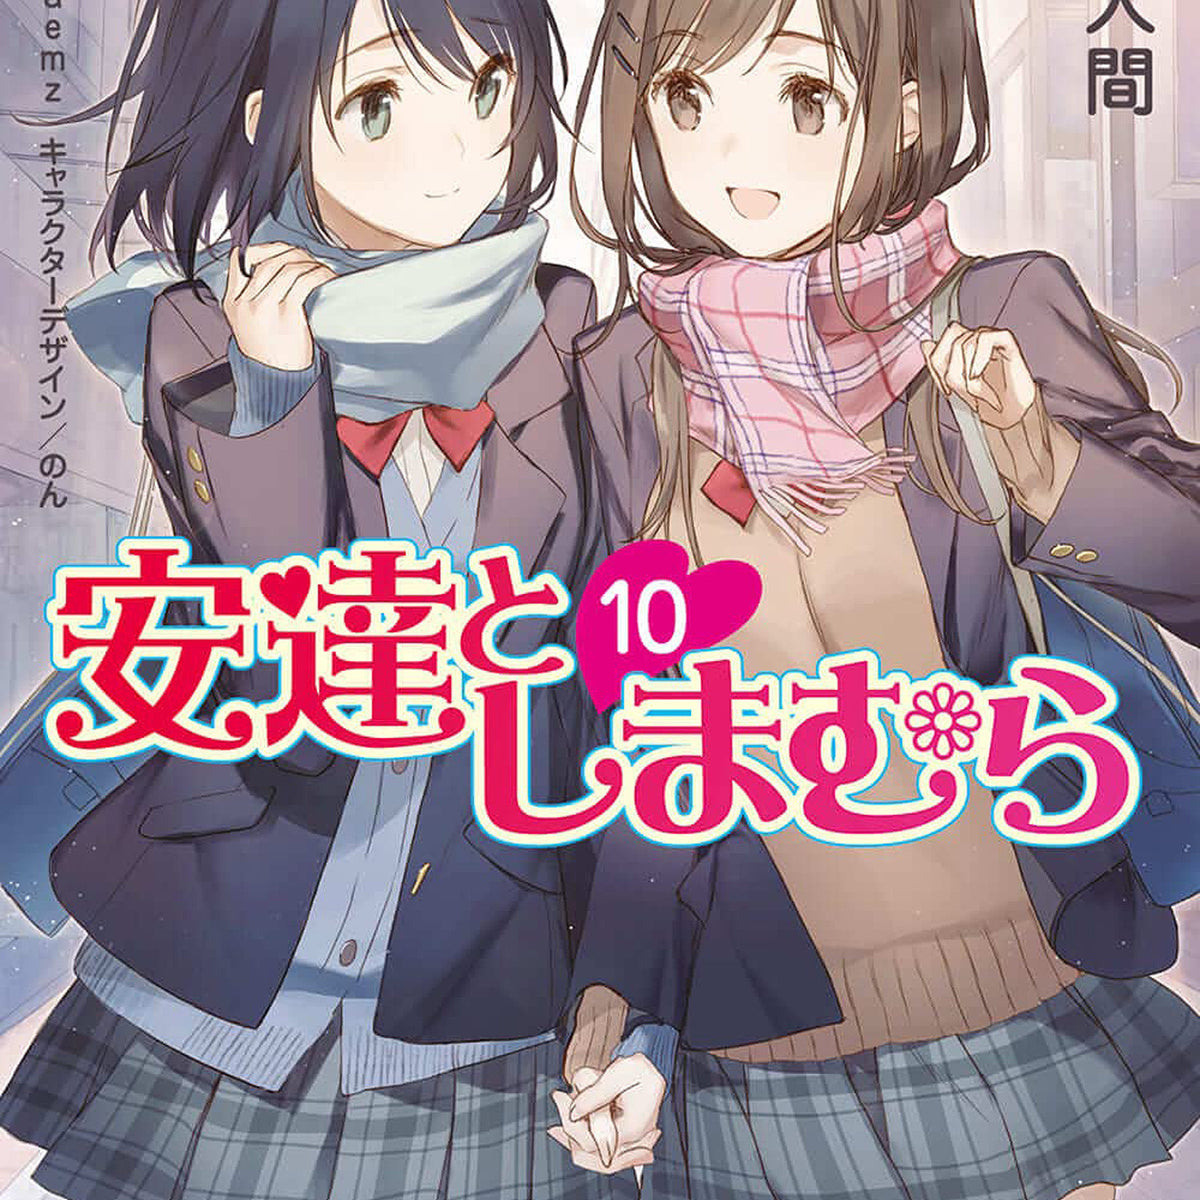 Adachi and Shimamura (Light Novel) Vol. 10 See more